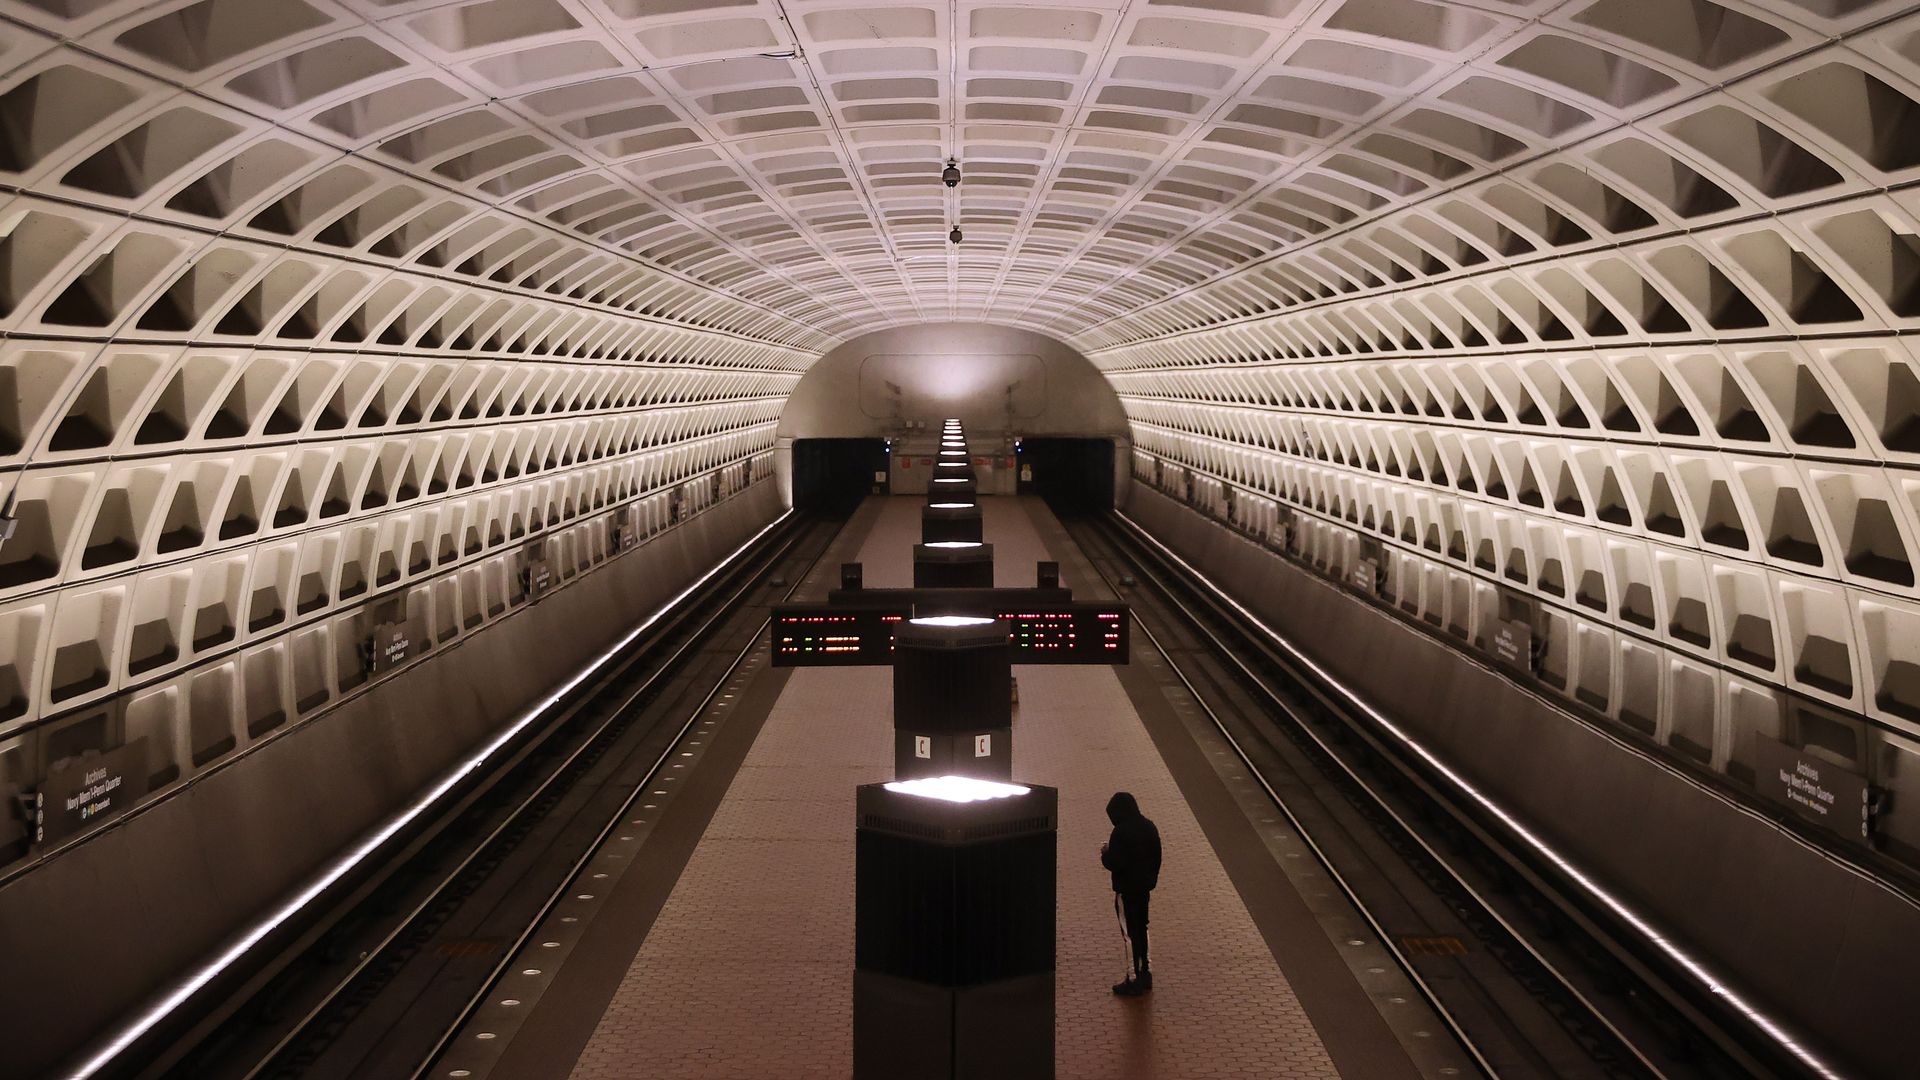 One passenger waits inside an empty Metro station.